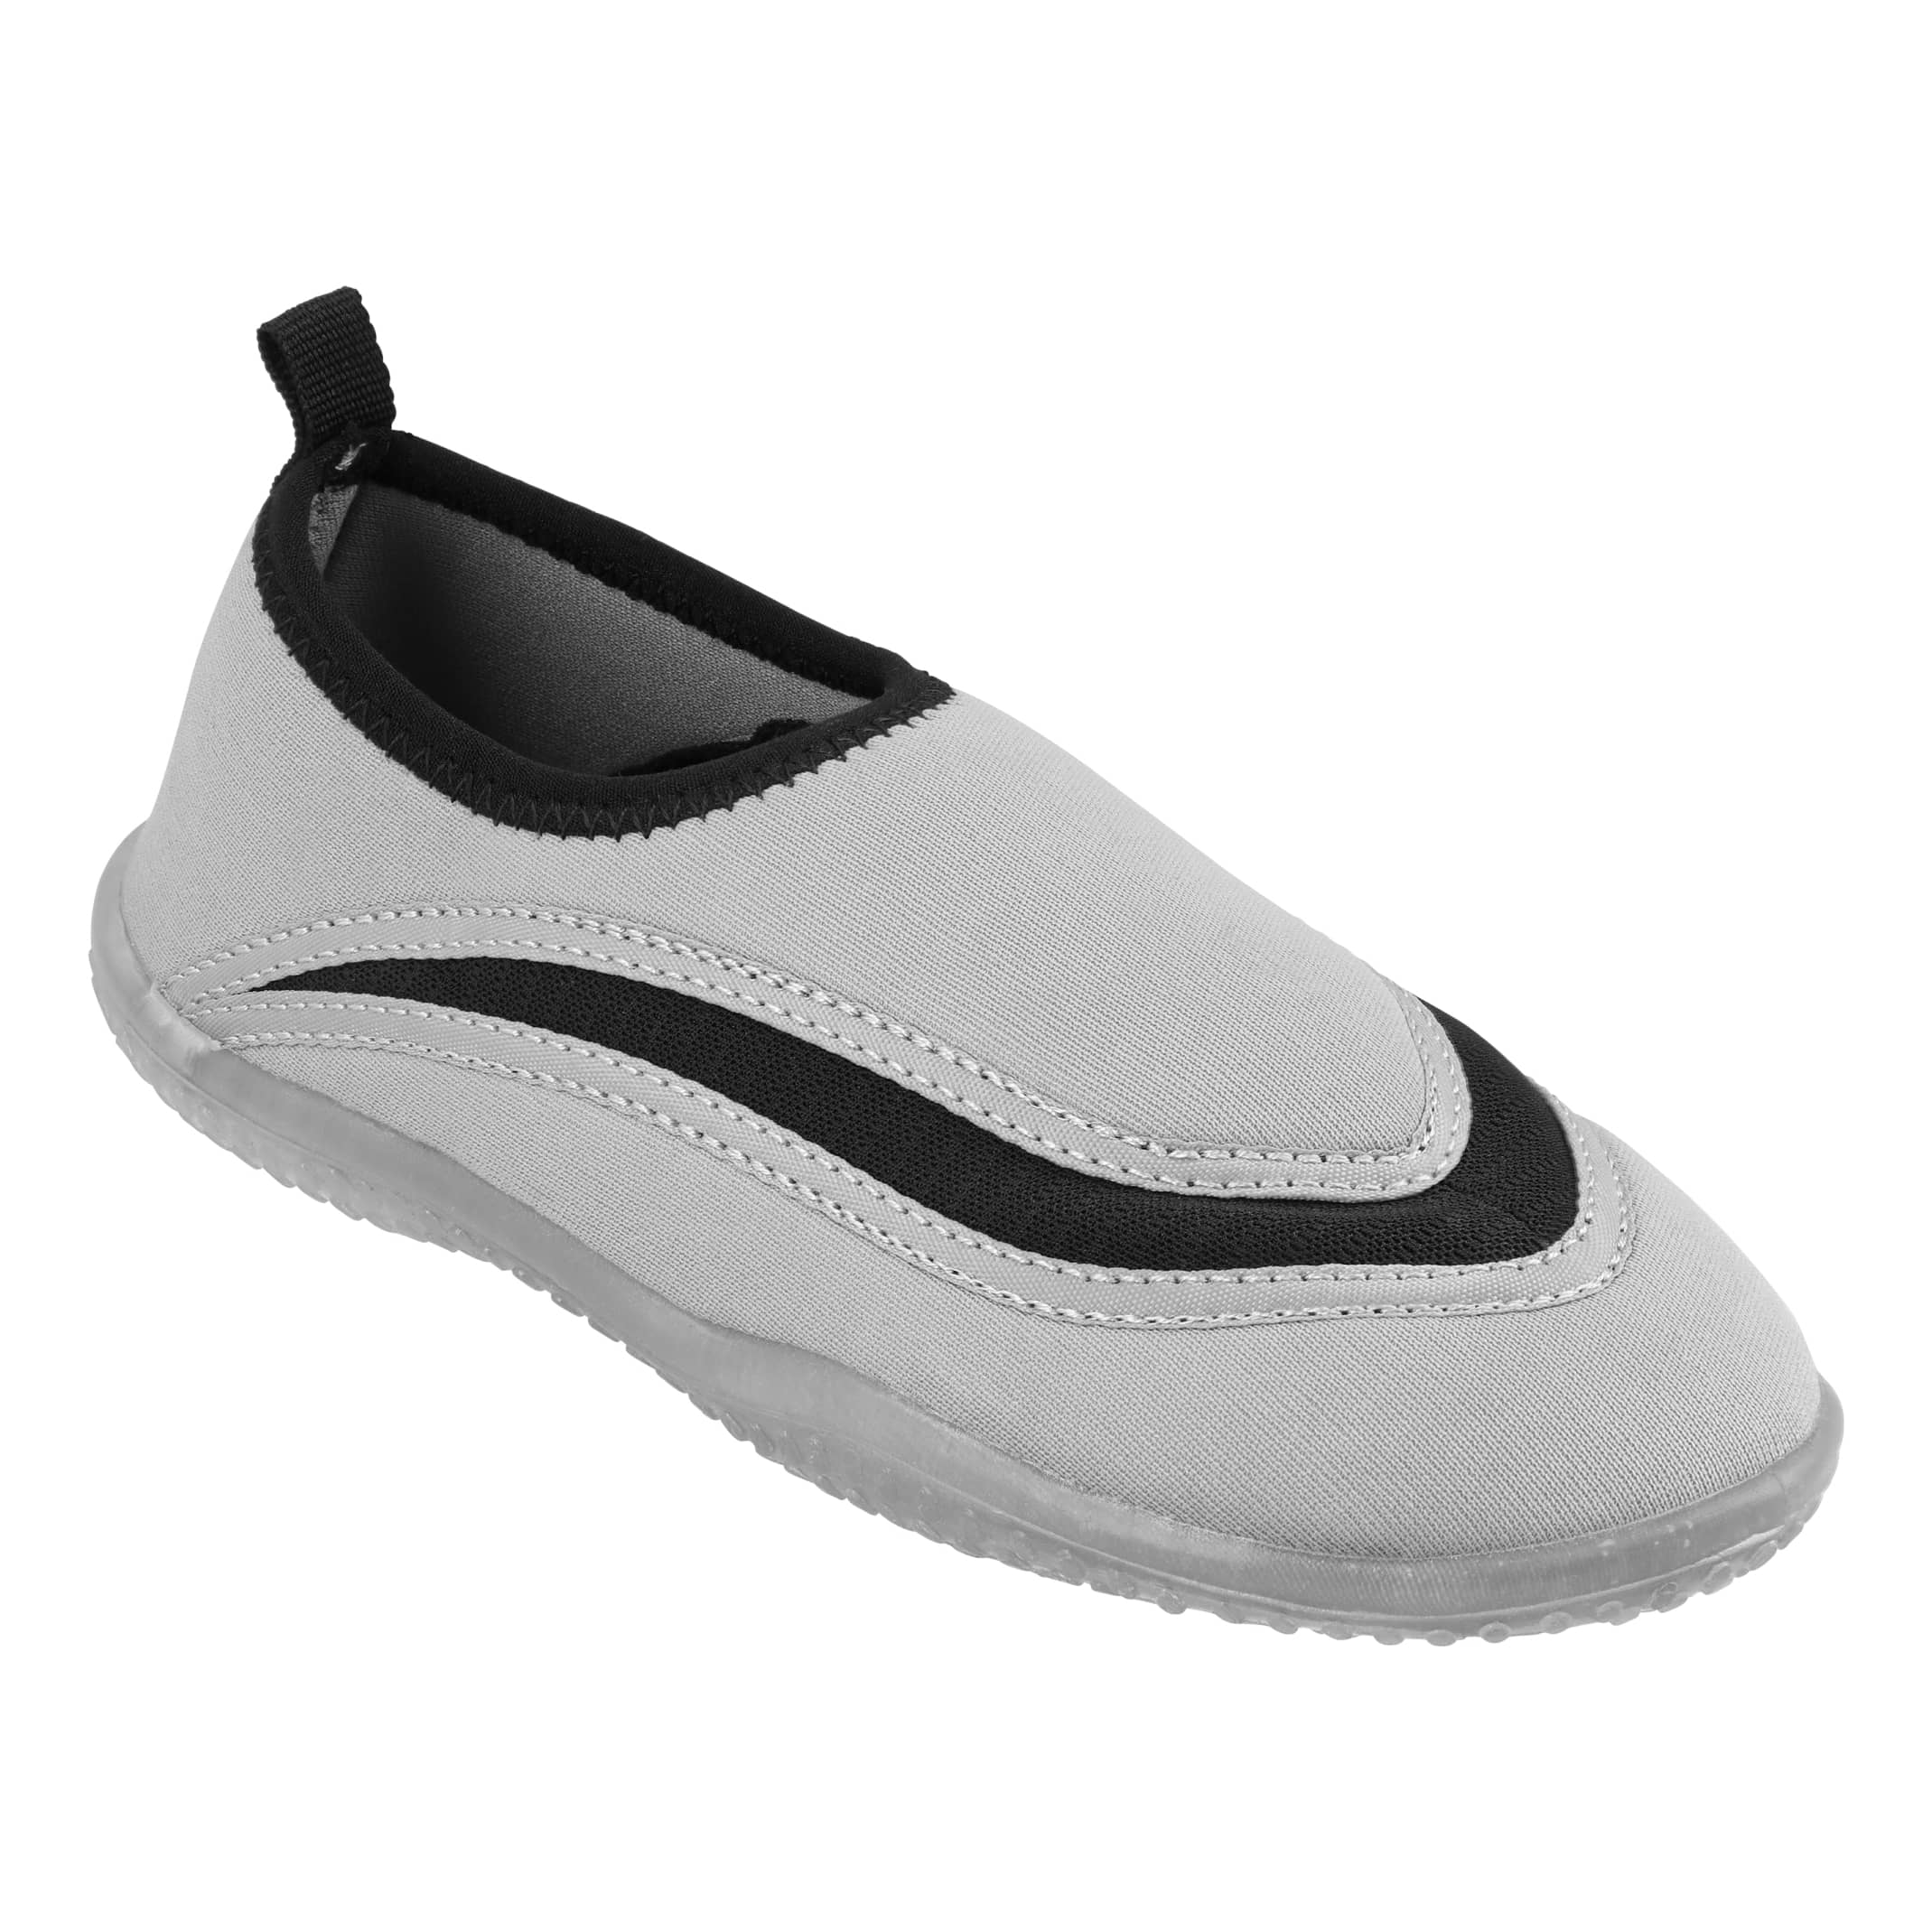 World Wide Sportsman Children’s Aqua Sox Water Shoes - Grey/Black